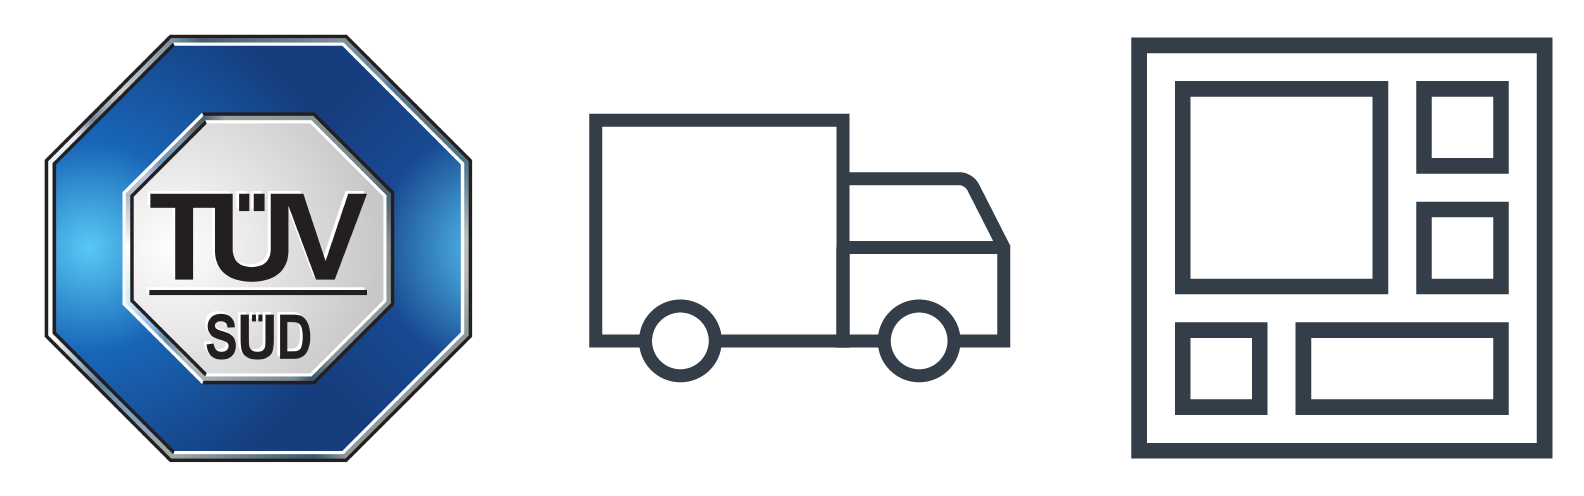 TUV logo, A lorry, a chip. 